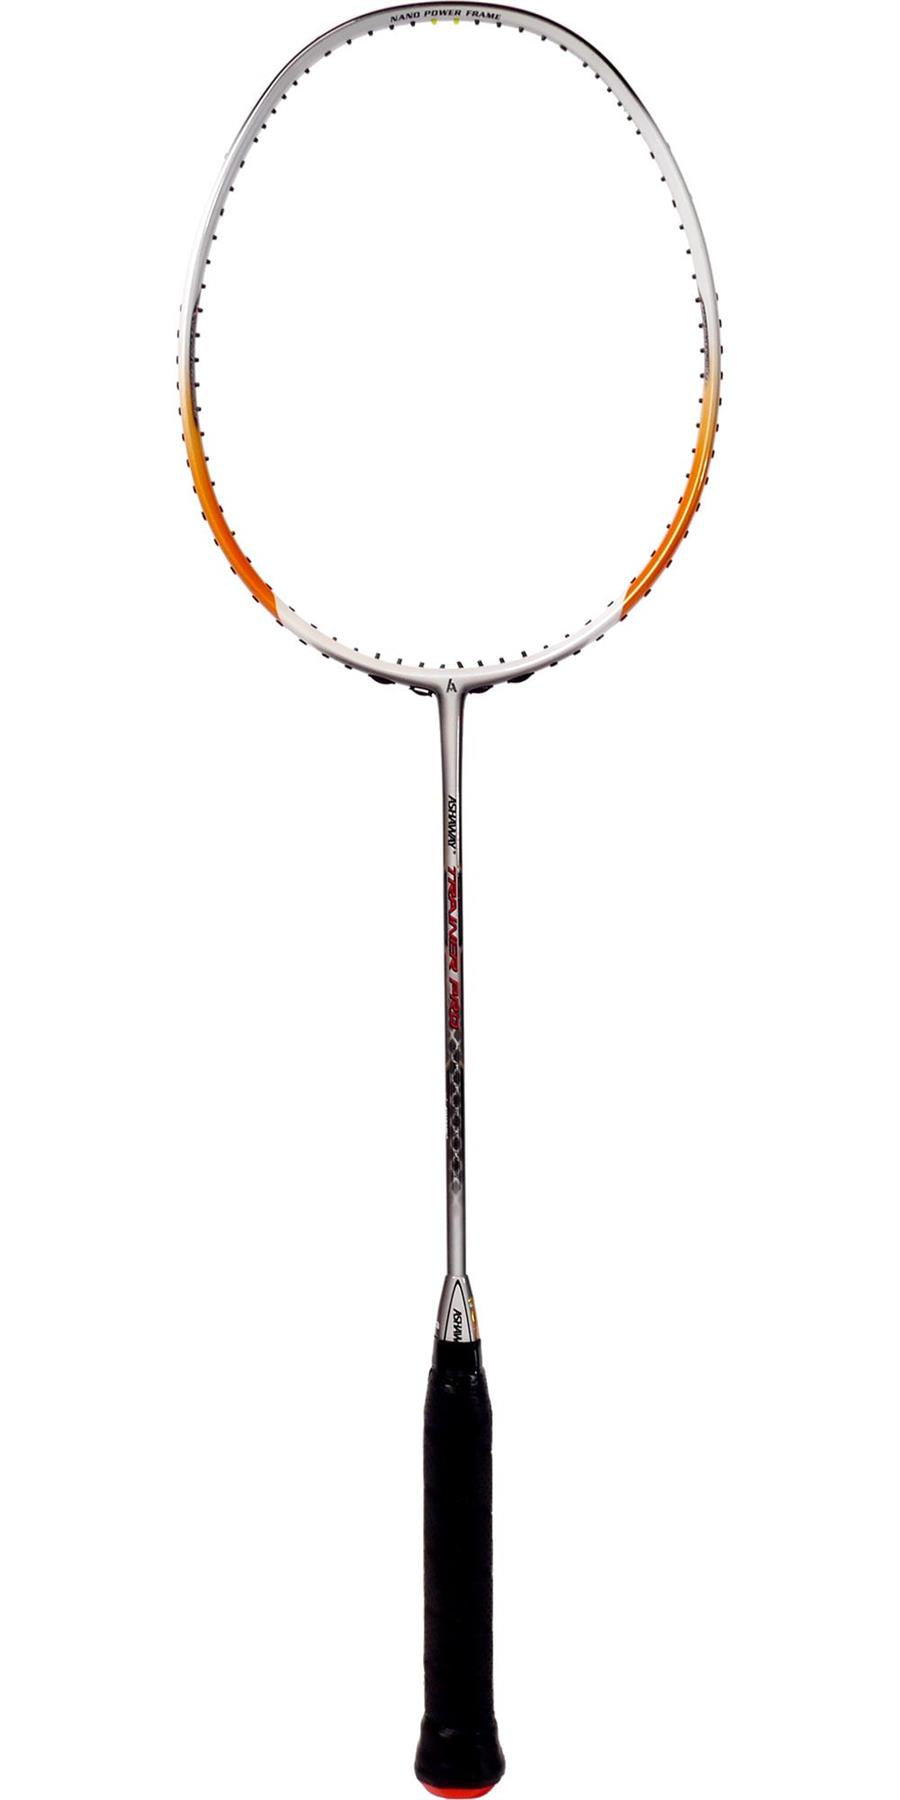 Ashaway Trainer Pro Badminton Racket - Silver / Orange - Single